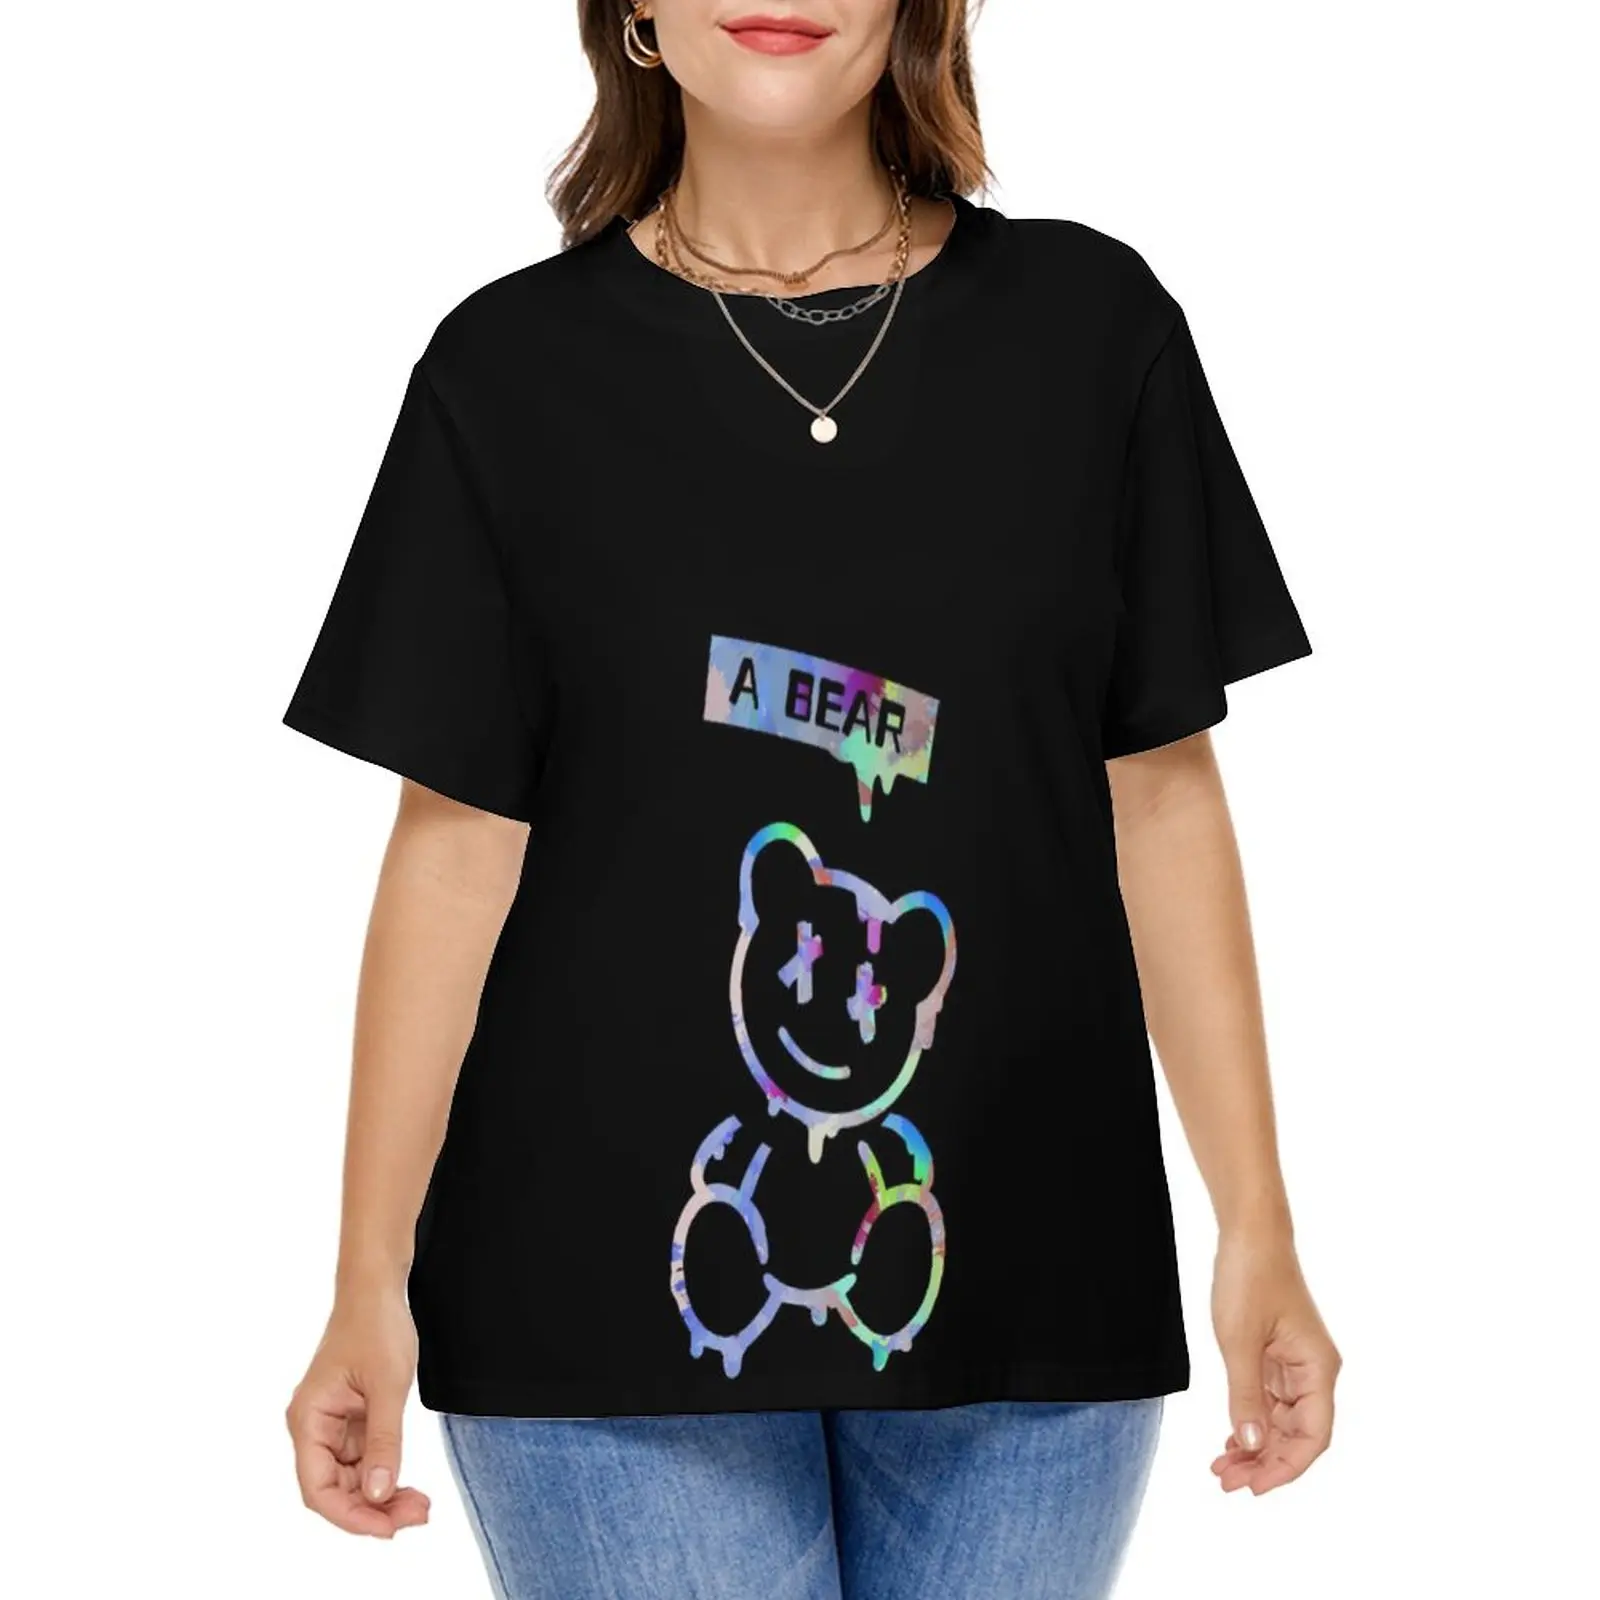 A Bear T-Shirt Graffiti Abstract Design Hip Hop T-Shirts Short Sleeve Pattern Tshirt Female Casual Tees Plus Size